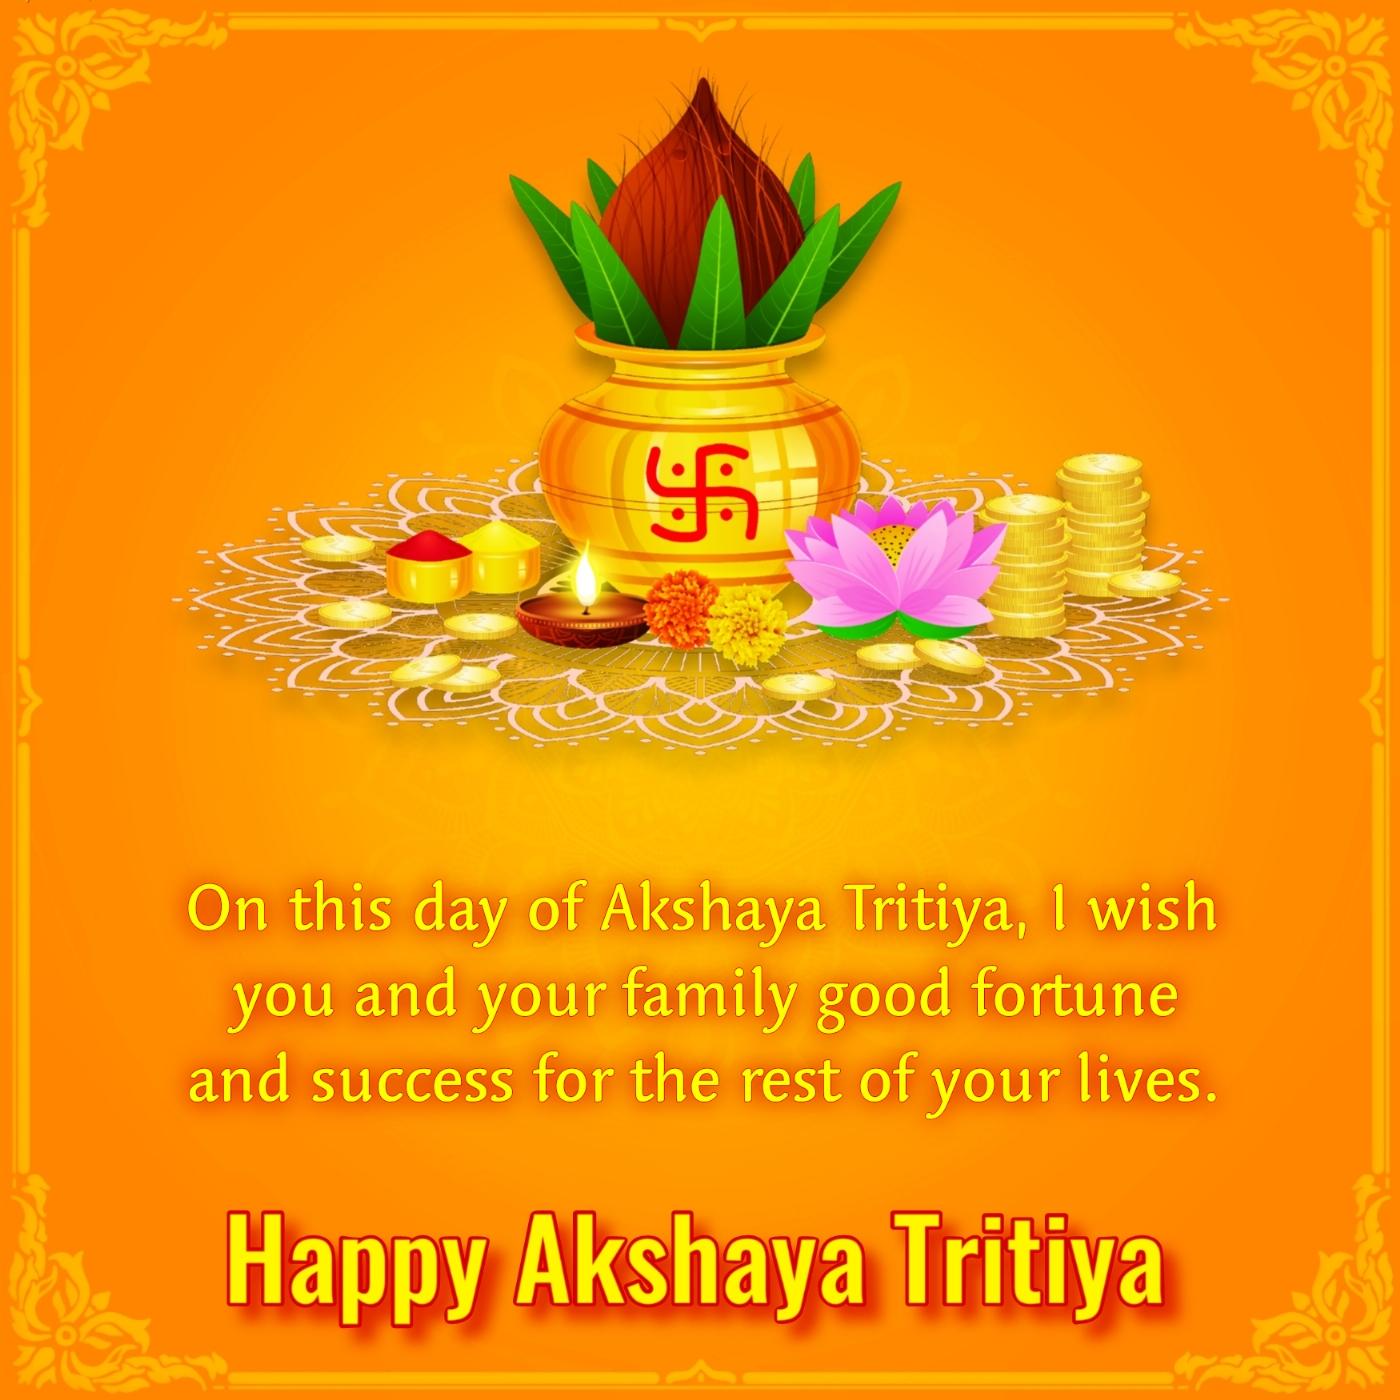 On this day of Akshaya Tritiya I wish you and your family